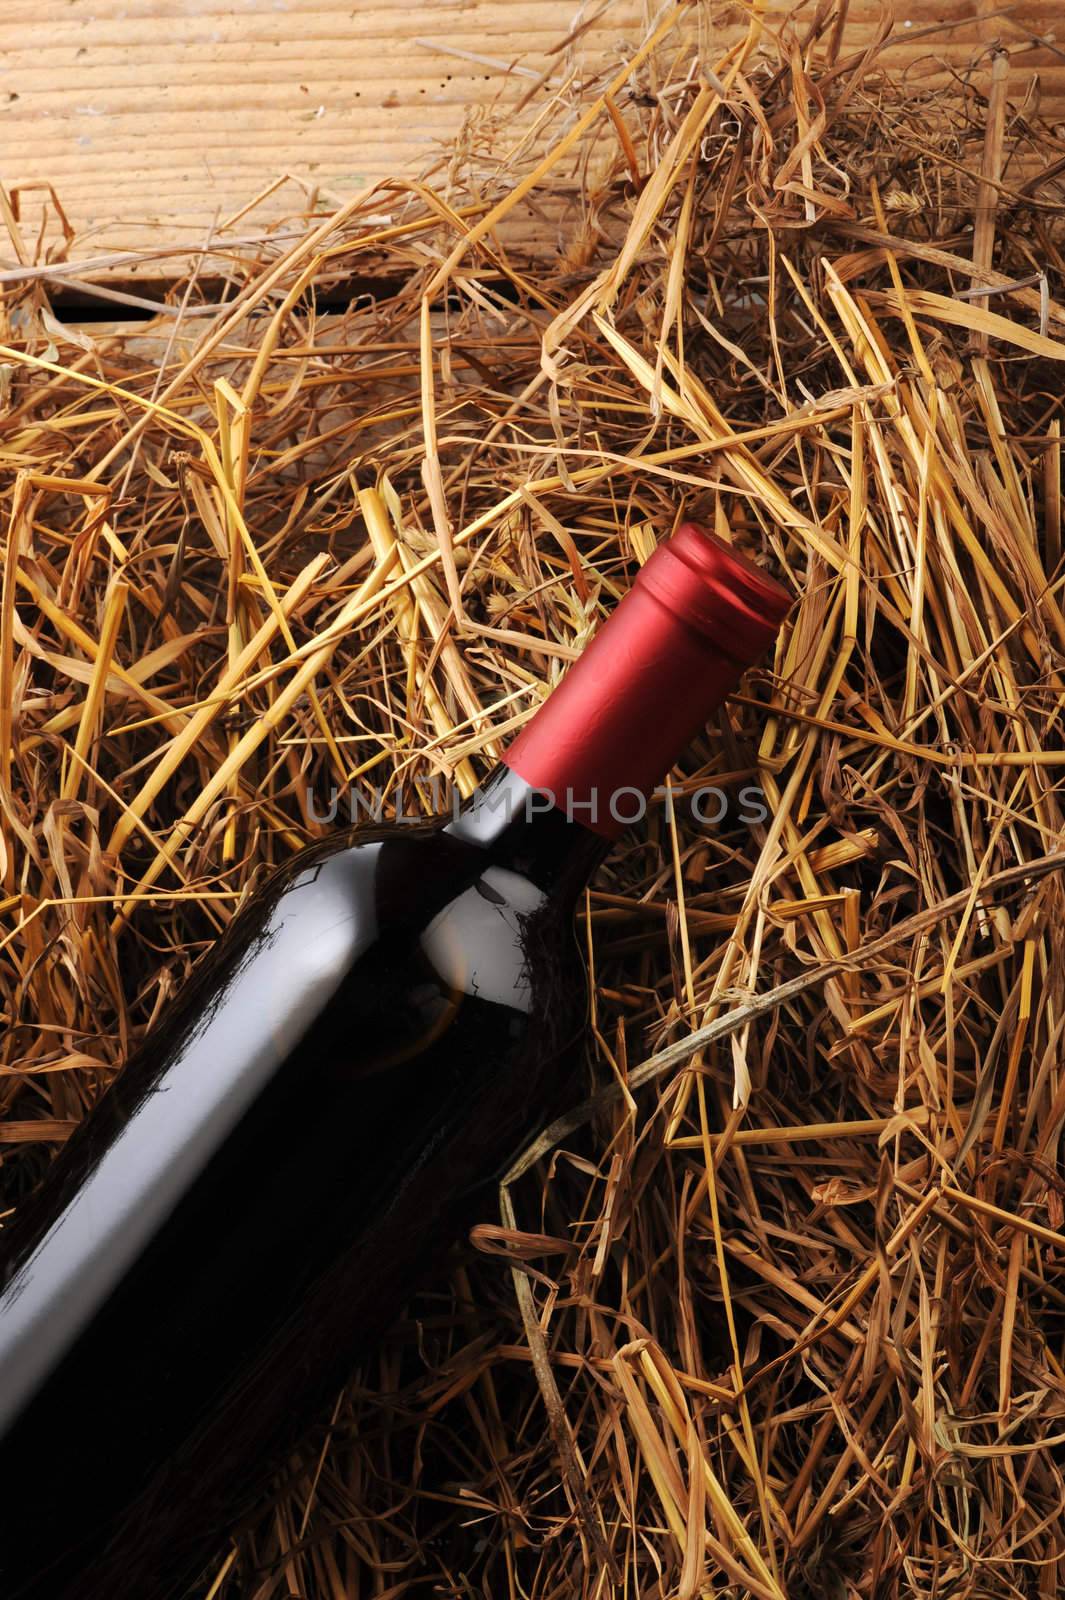 wine bottle on a straw background